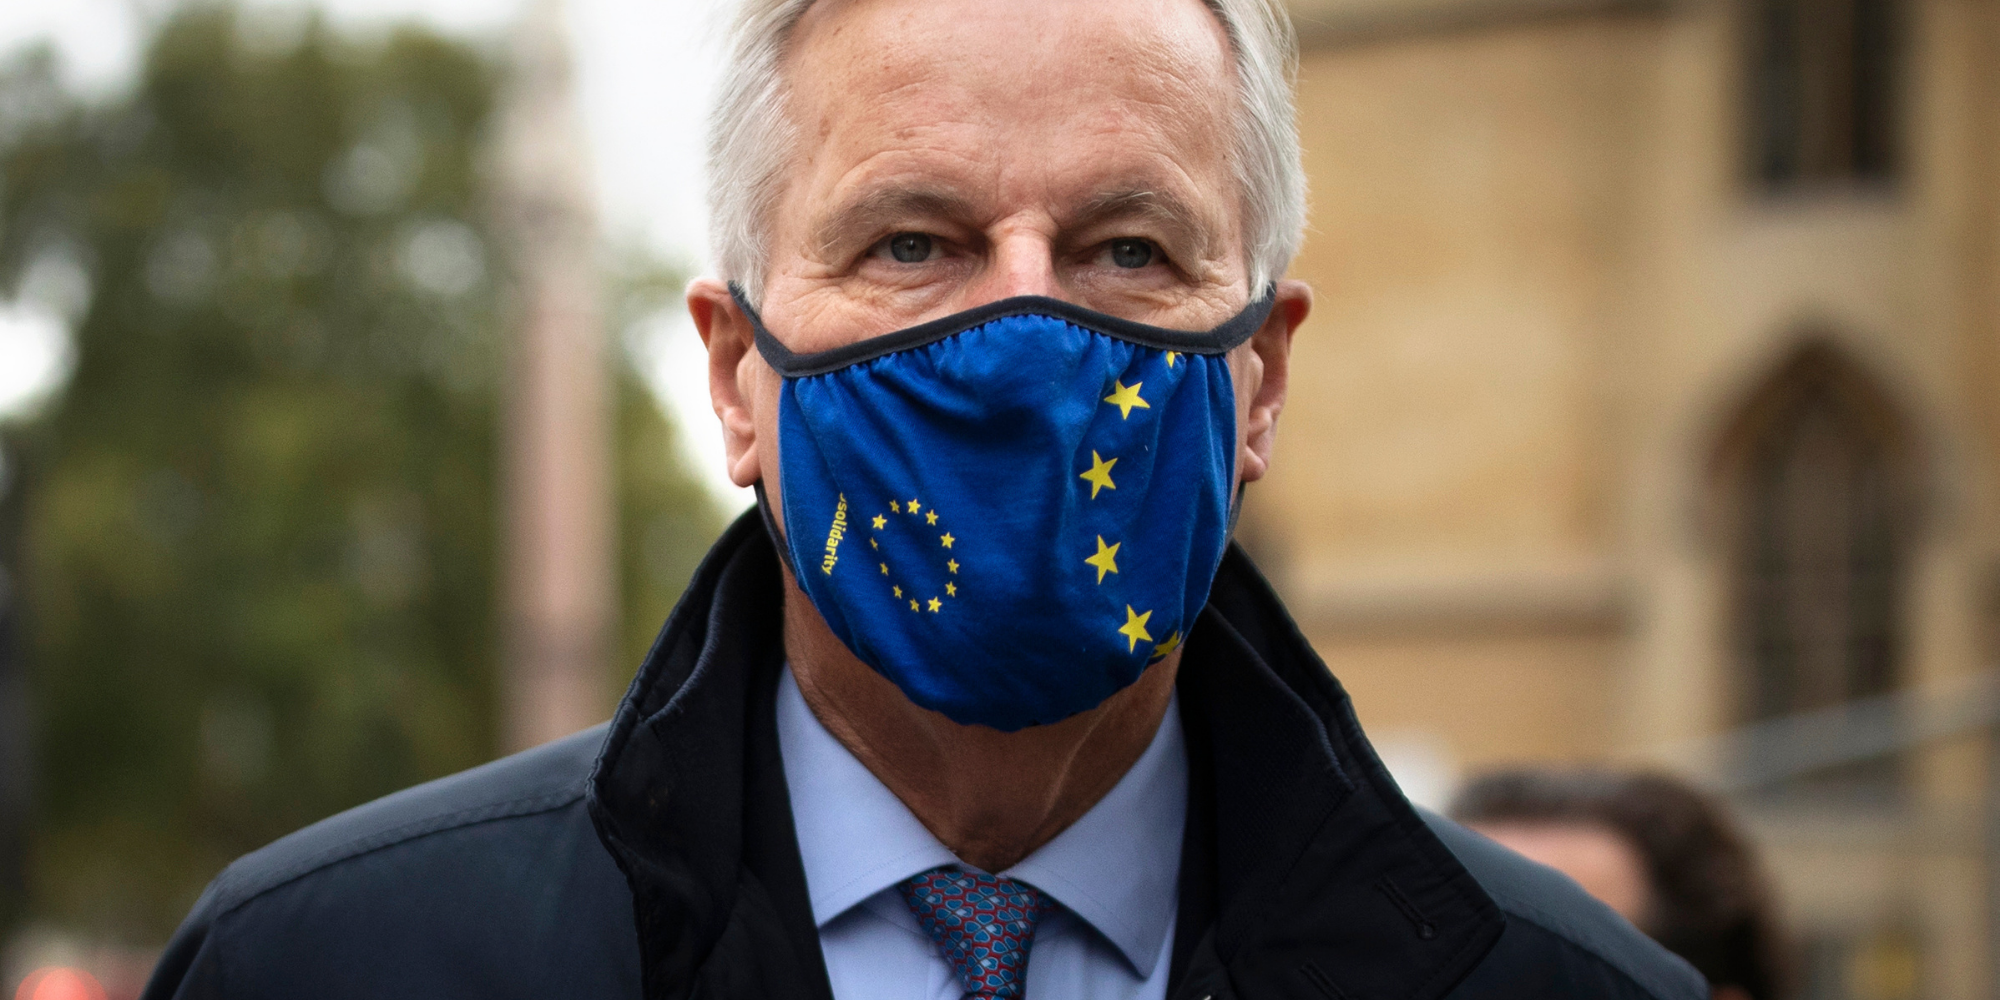 The EU’s chief negotiator, Michel Barnier